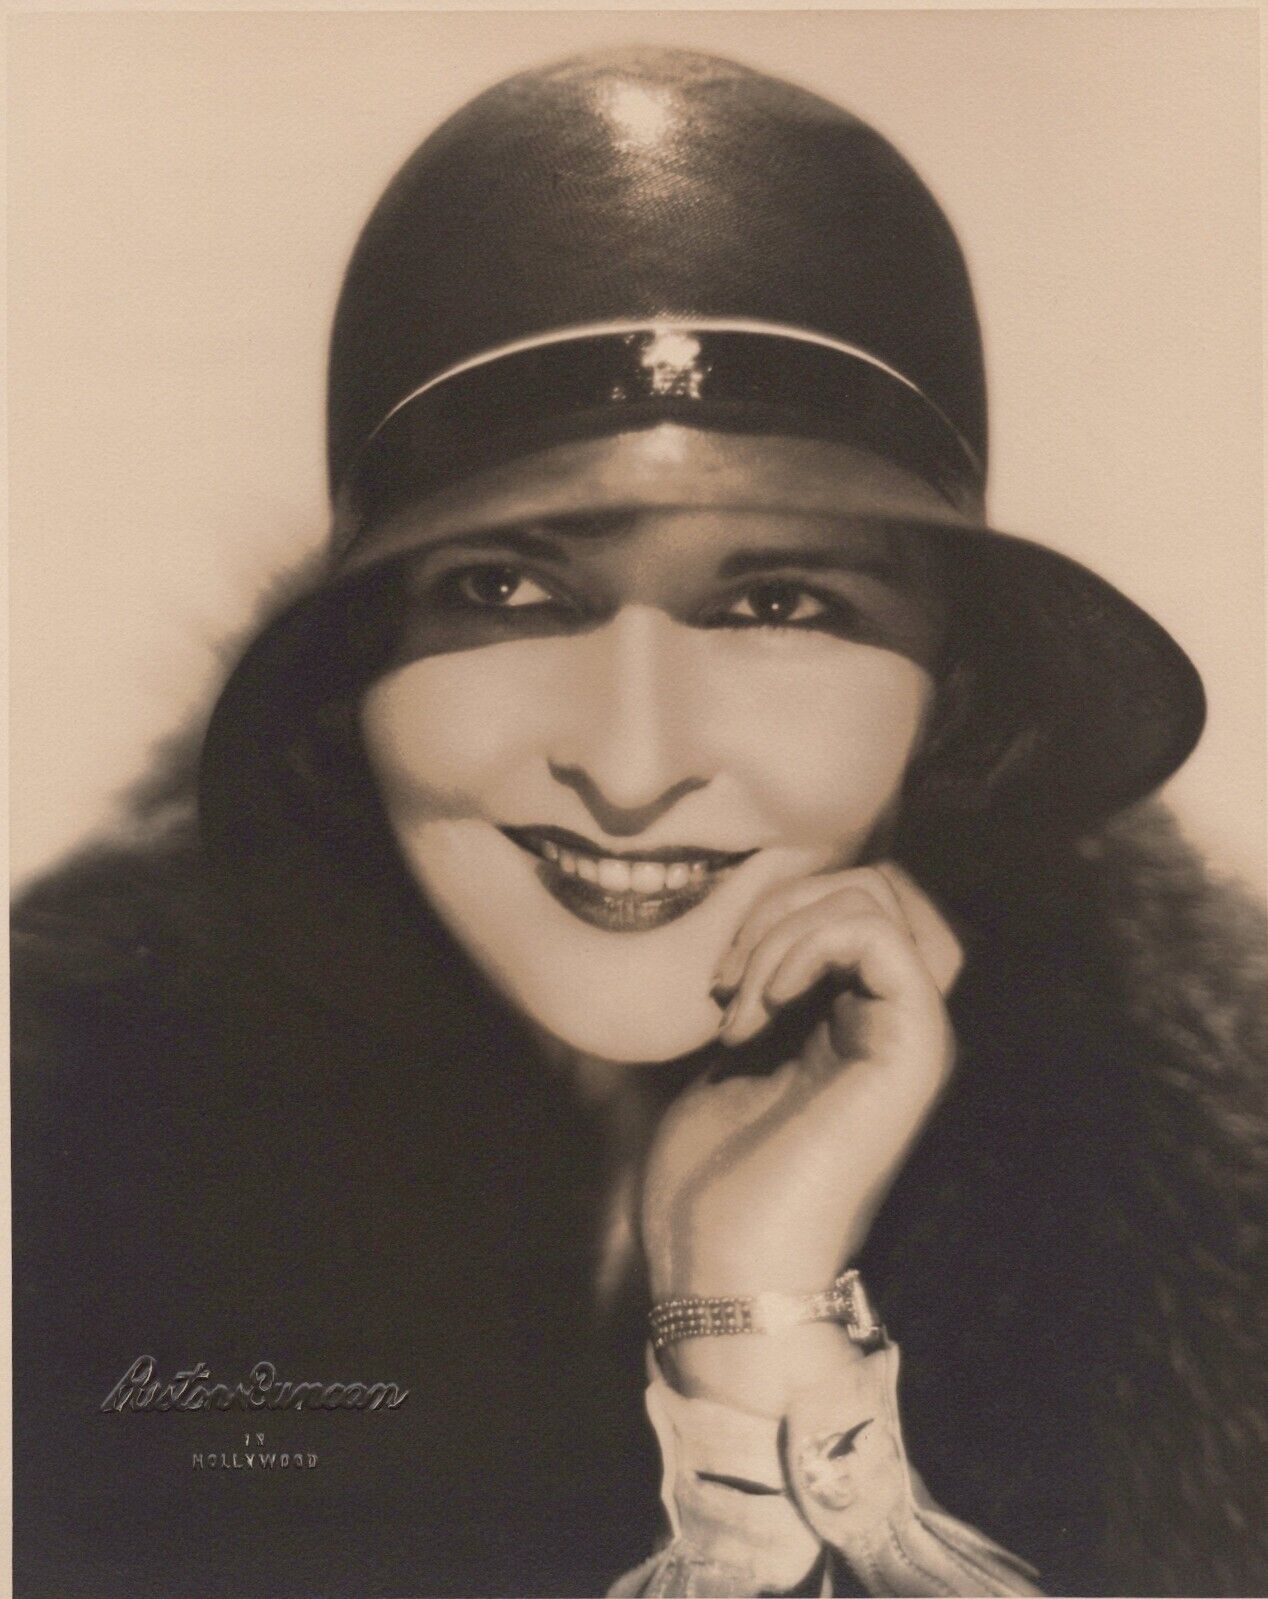 Gladys Lloyd (1930s) 🎬⭐ Stunning Portrait Vintage Photo by Preston Duncan K 205